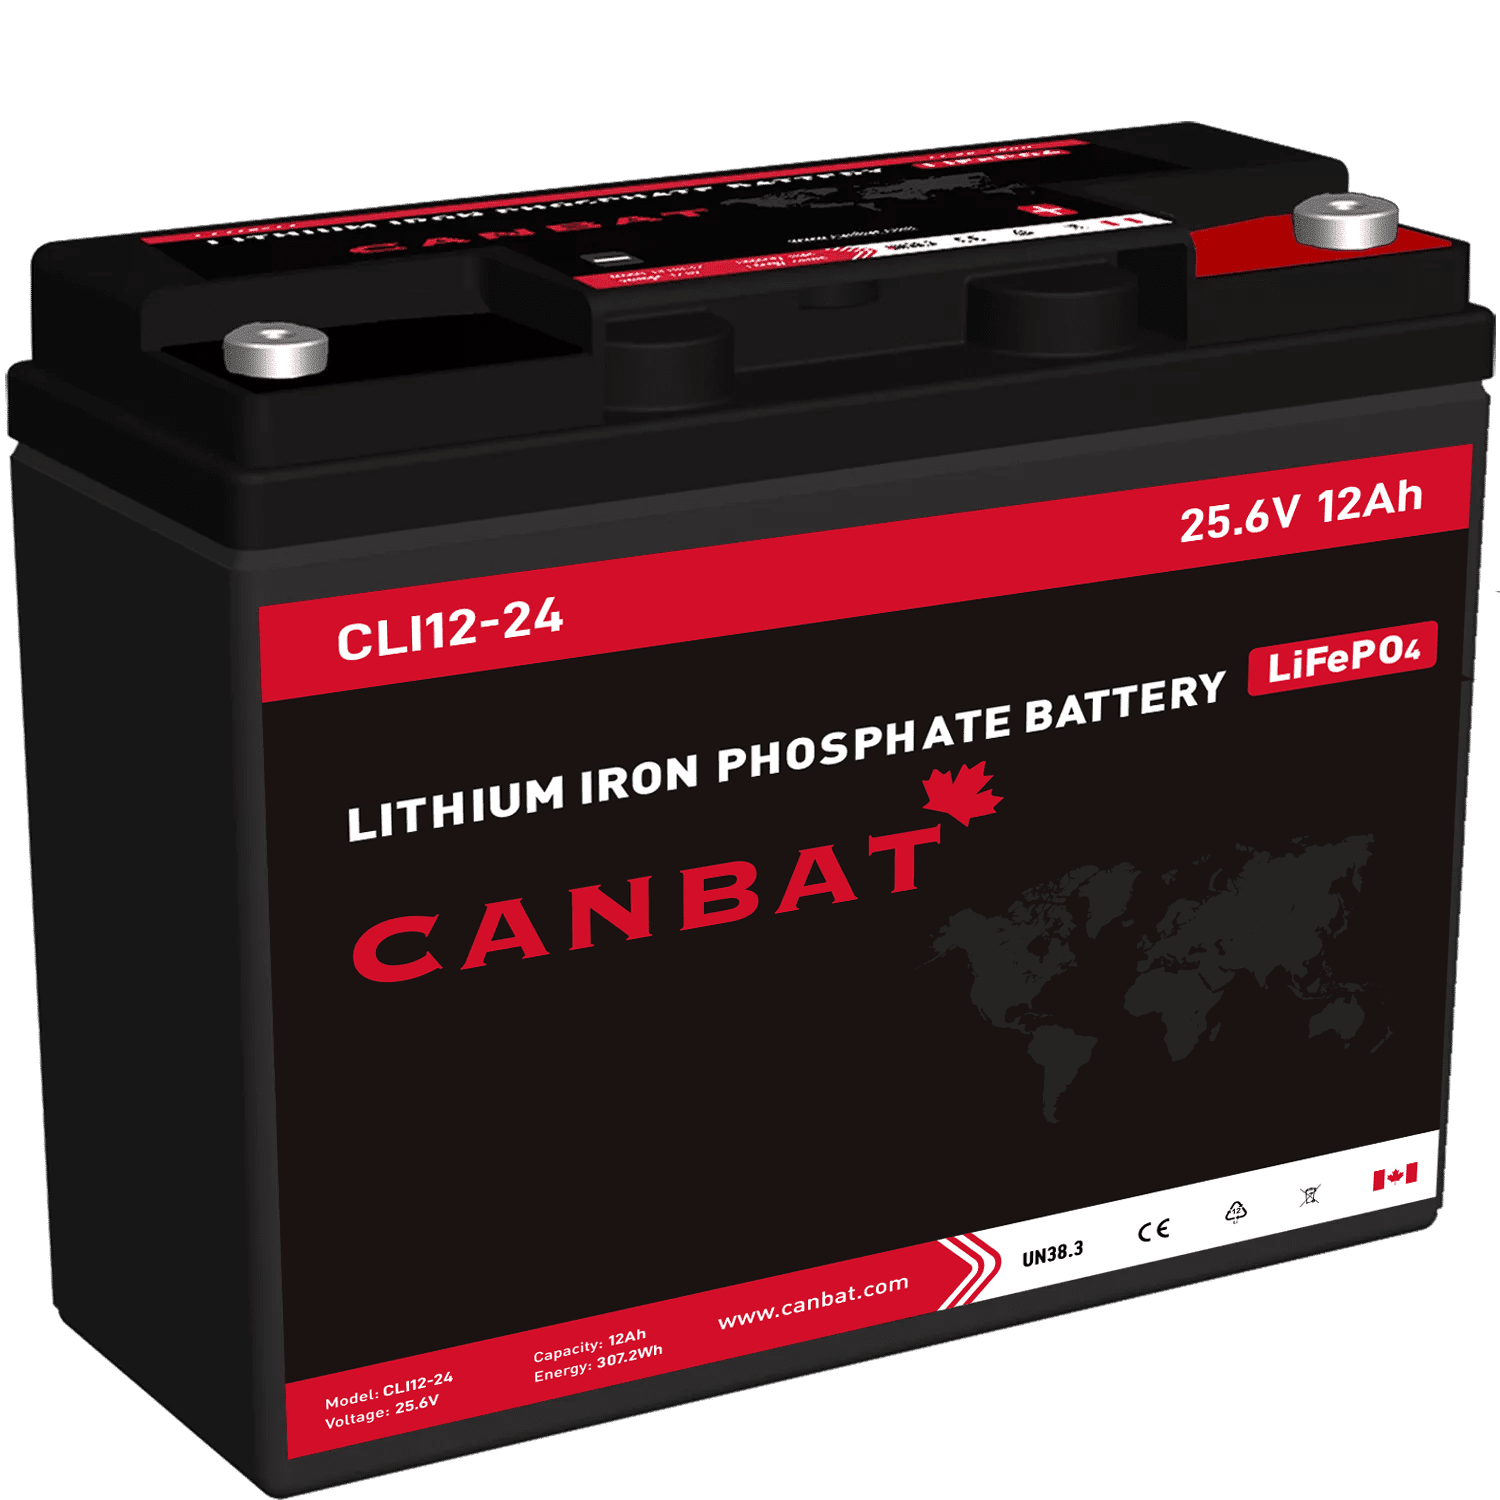 24 volt batteries,24V Lithium Battery